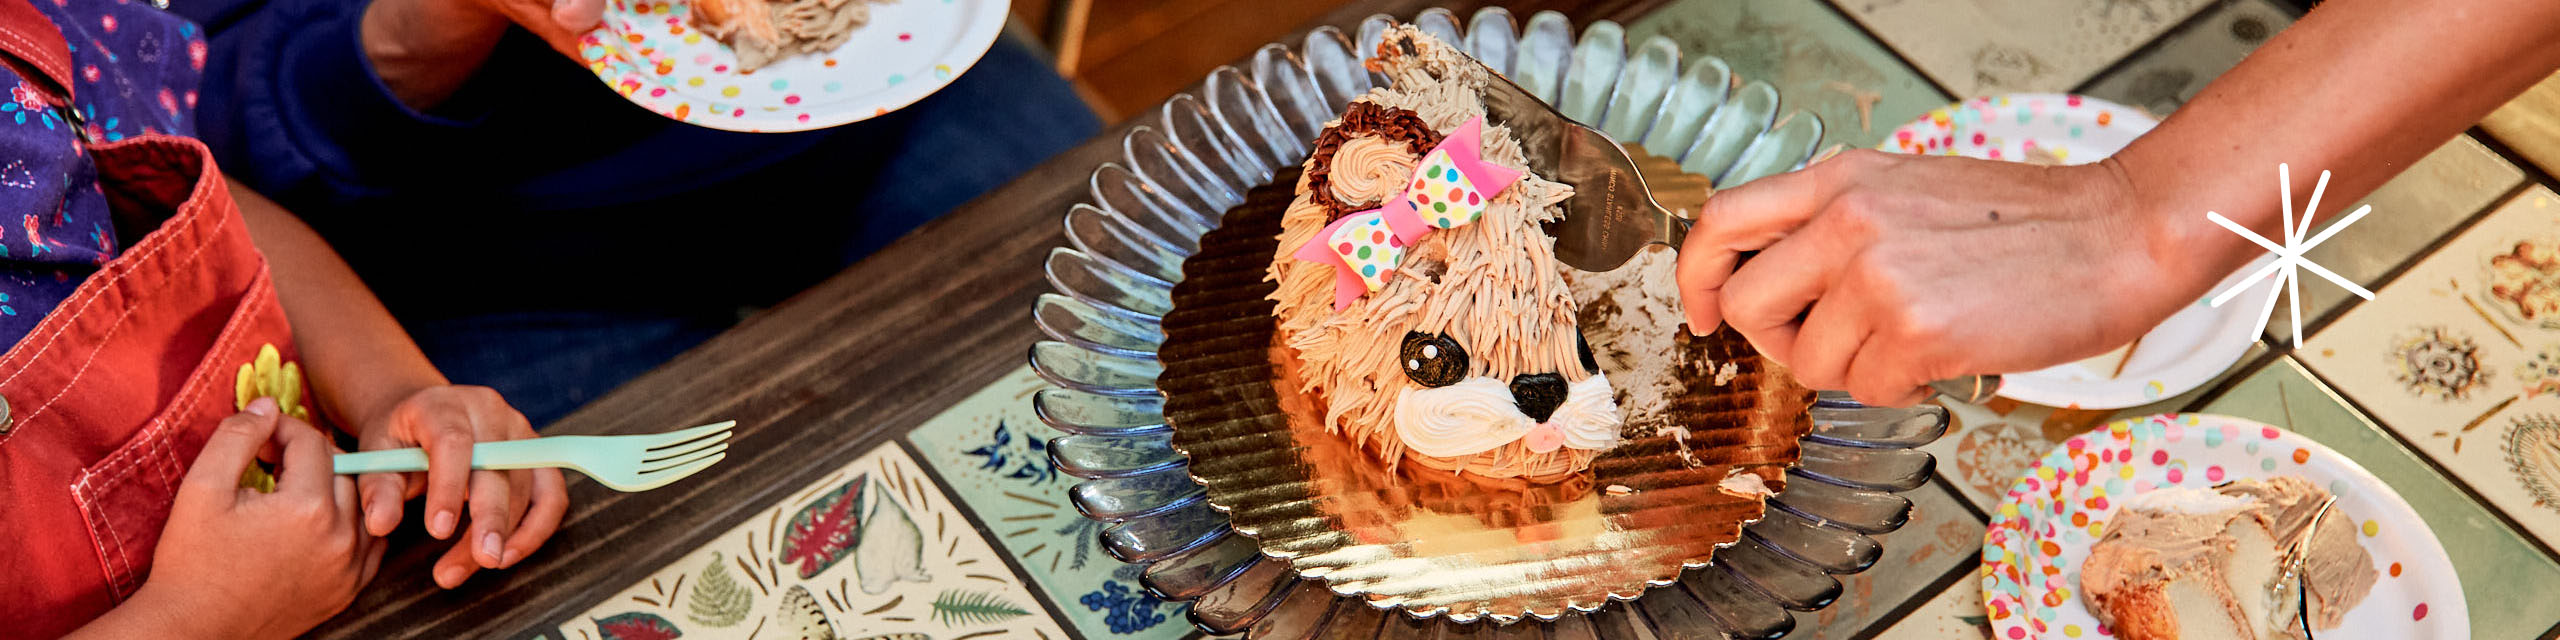 Menlo Park baker wins $10K in Cake Challenge | News | Almanac Online |